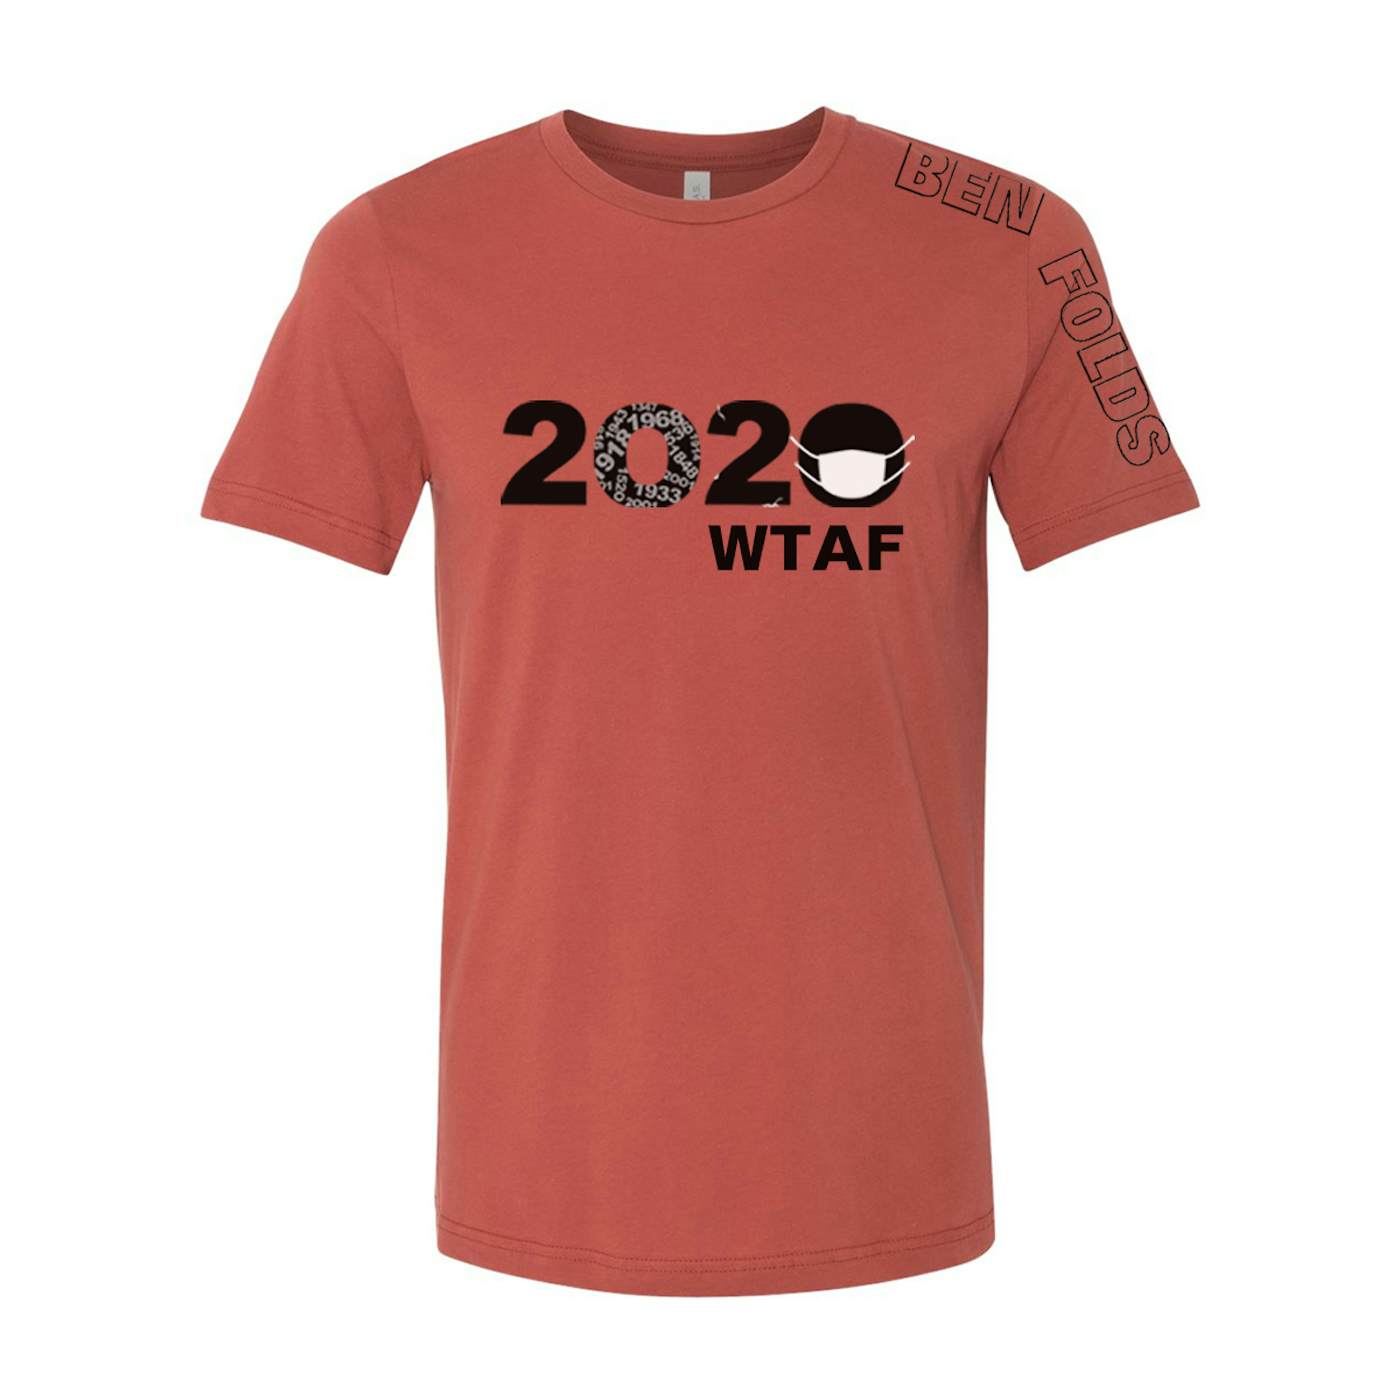 Ben Folds 2020 WTAF T-shirt